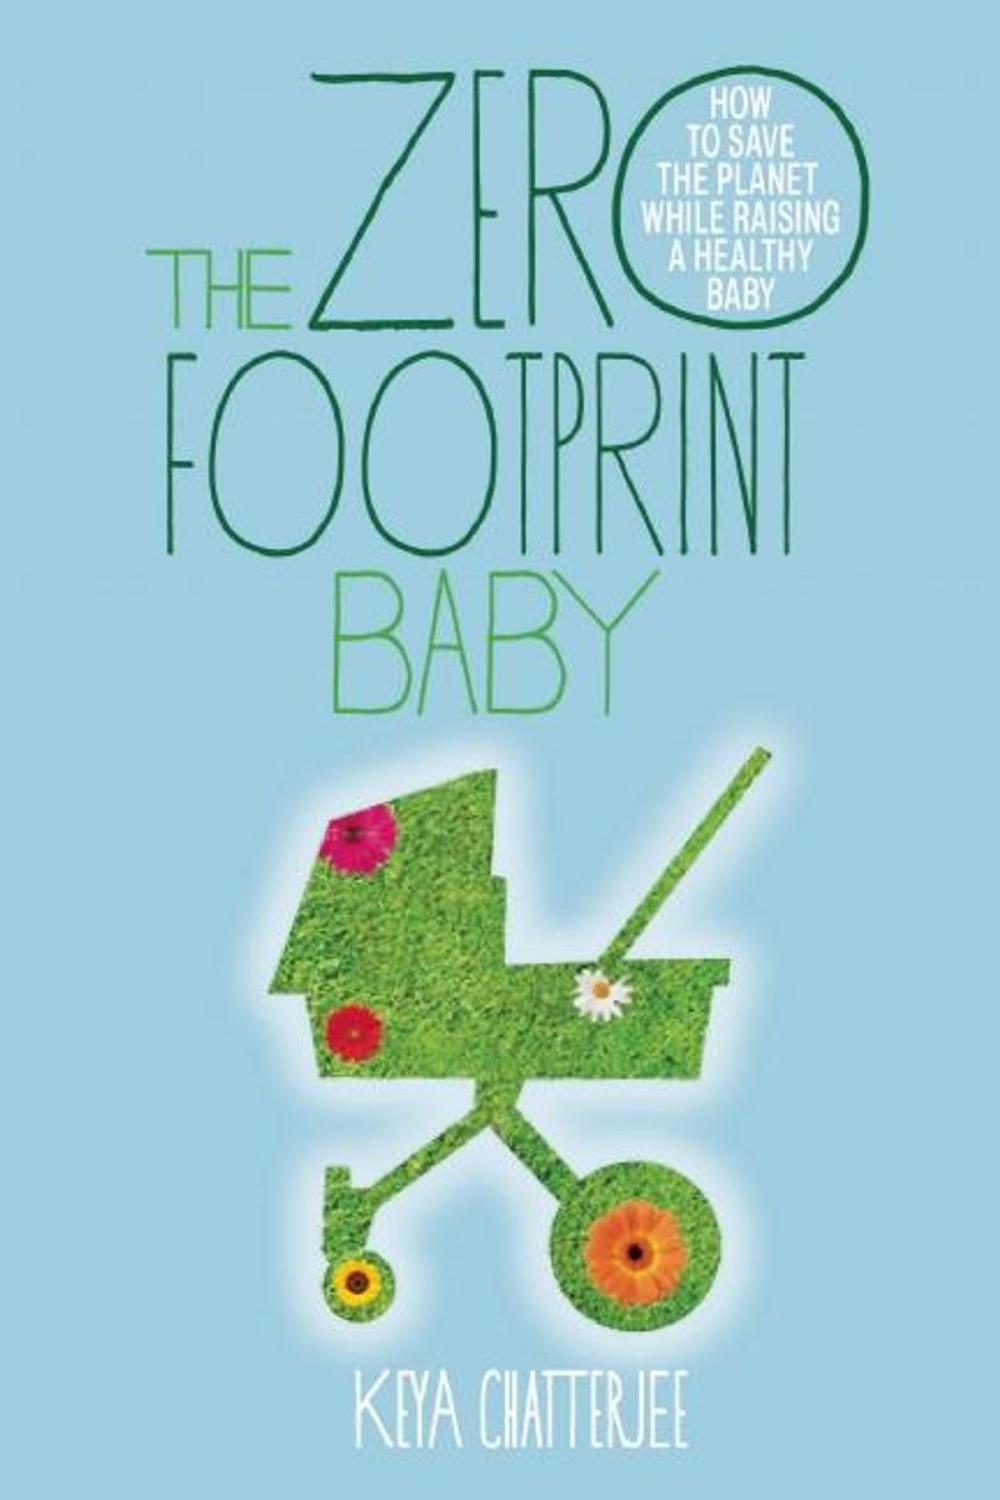 Big bigCover of The Zero Footprint Baby